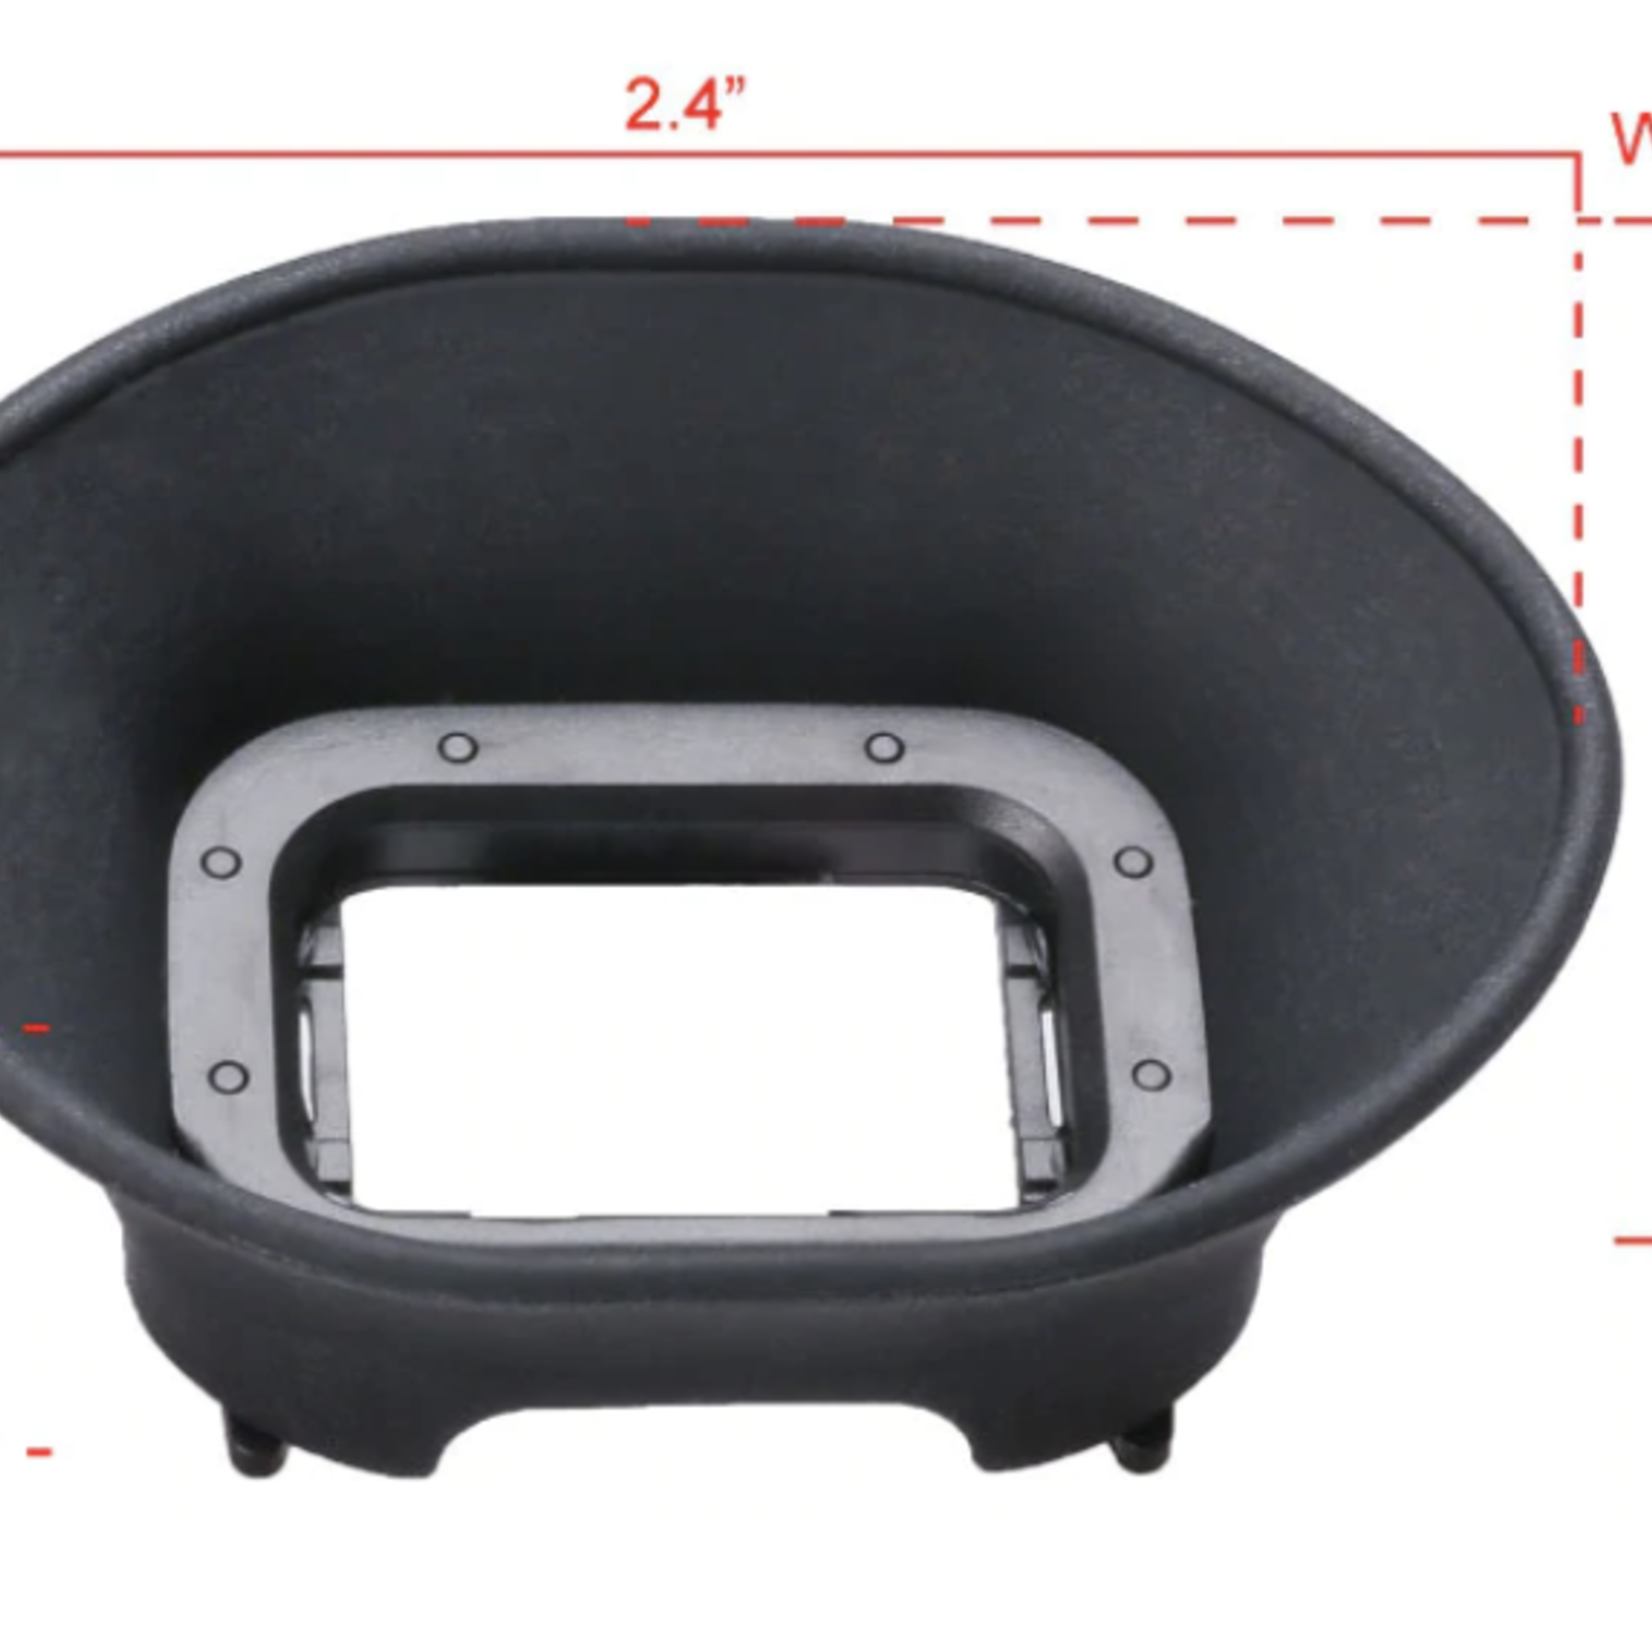 Hoodman Hoodman Eyecup for Mirrorless Sony Series A1, A7 SIII, A7 IV